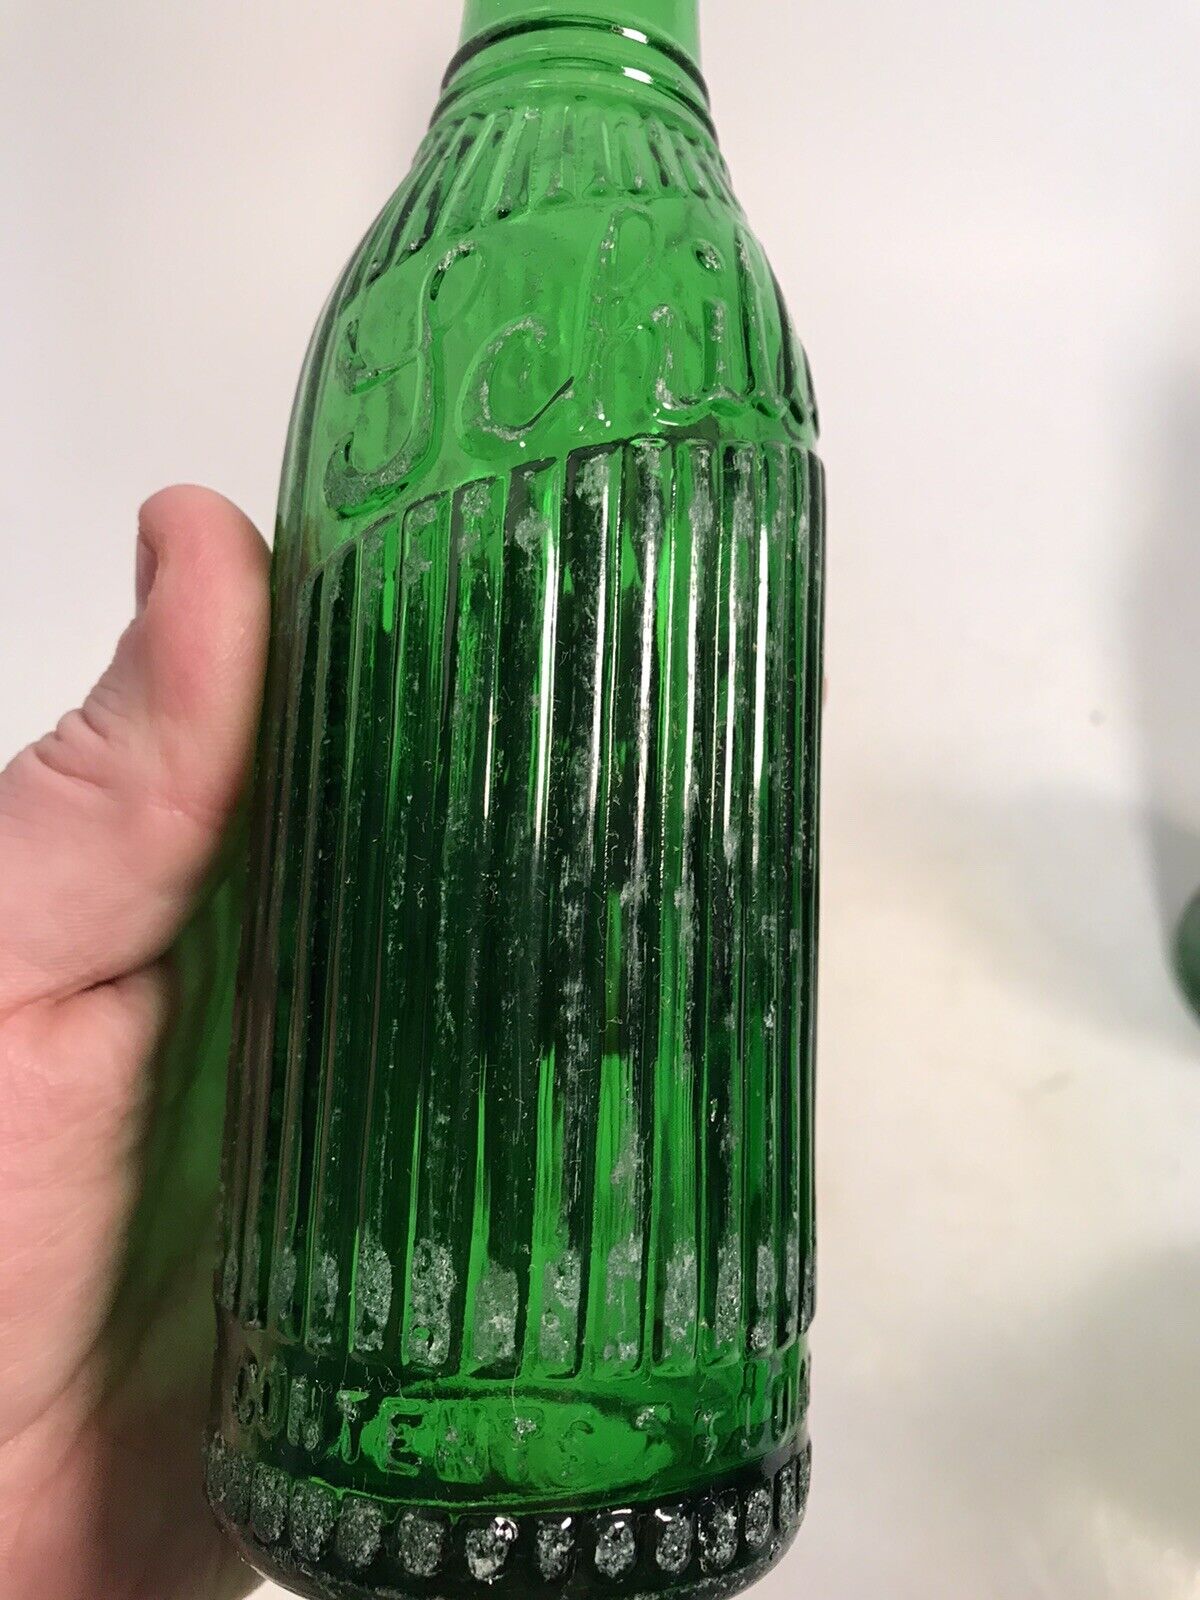 SCHILLE green Soda Bottles, Pop, Beverage, lot of 3 the same, dug, 7 ounce Без бренда - фотография #4